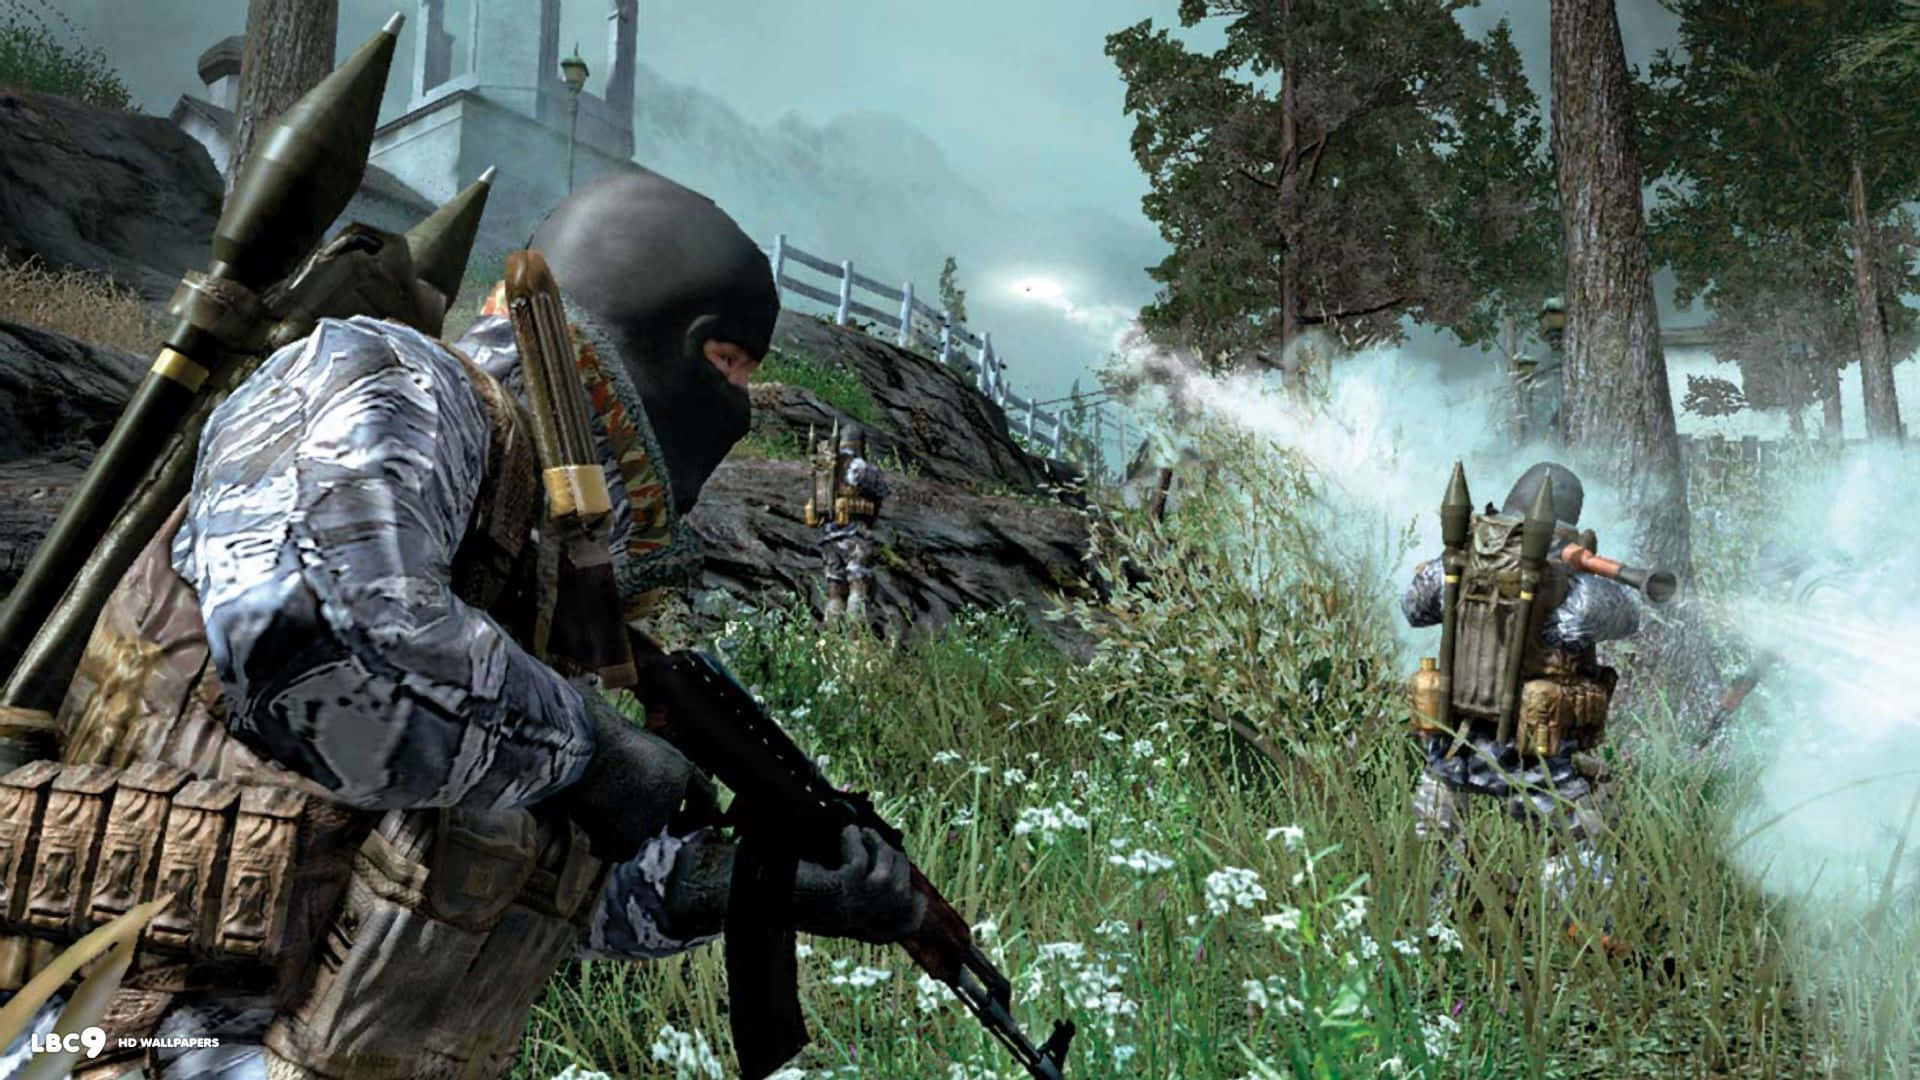 Intensaacción De Disparos En Primera Persona De Call Of Duty Fondo de pantalla